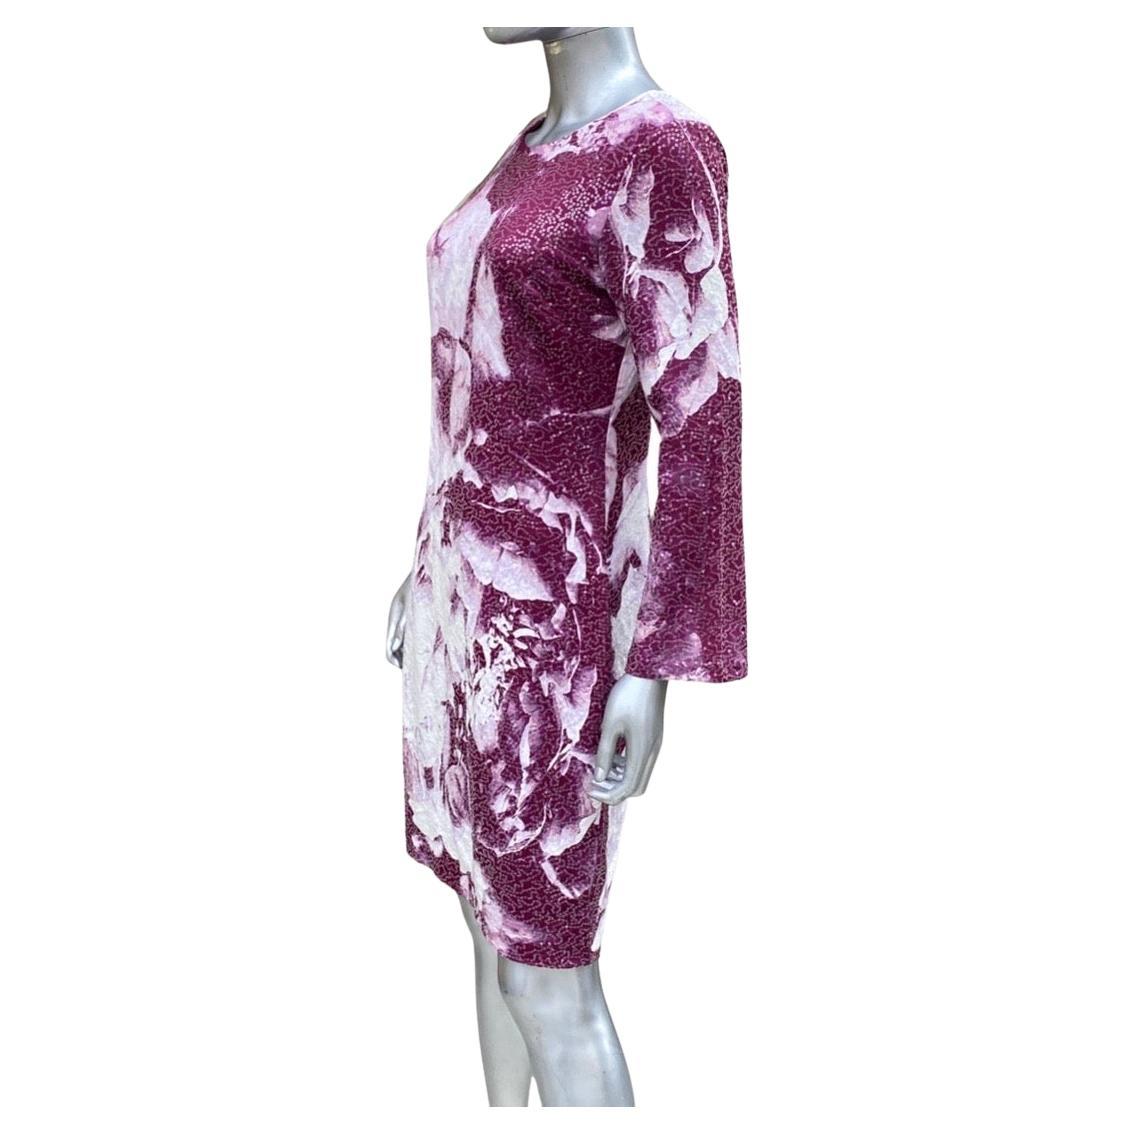 Donna Karan Sequin Jersey Abstract Magenta/White Floral Print Dress Size 8